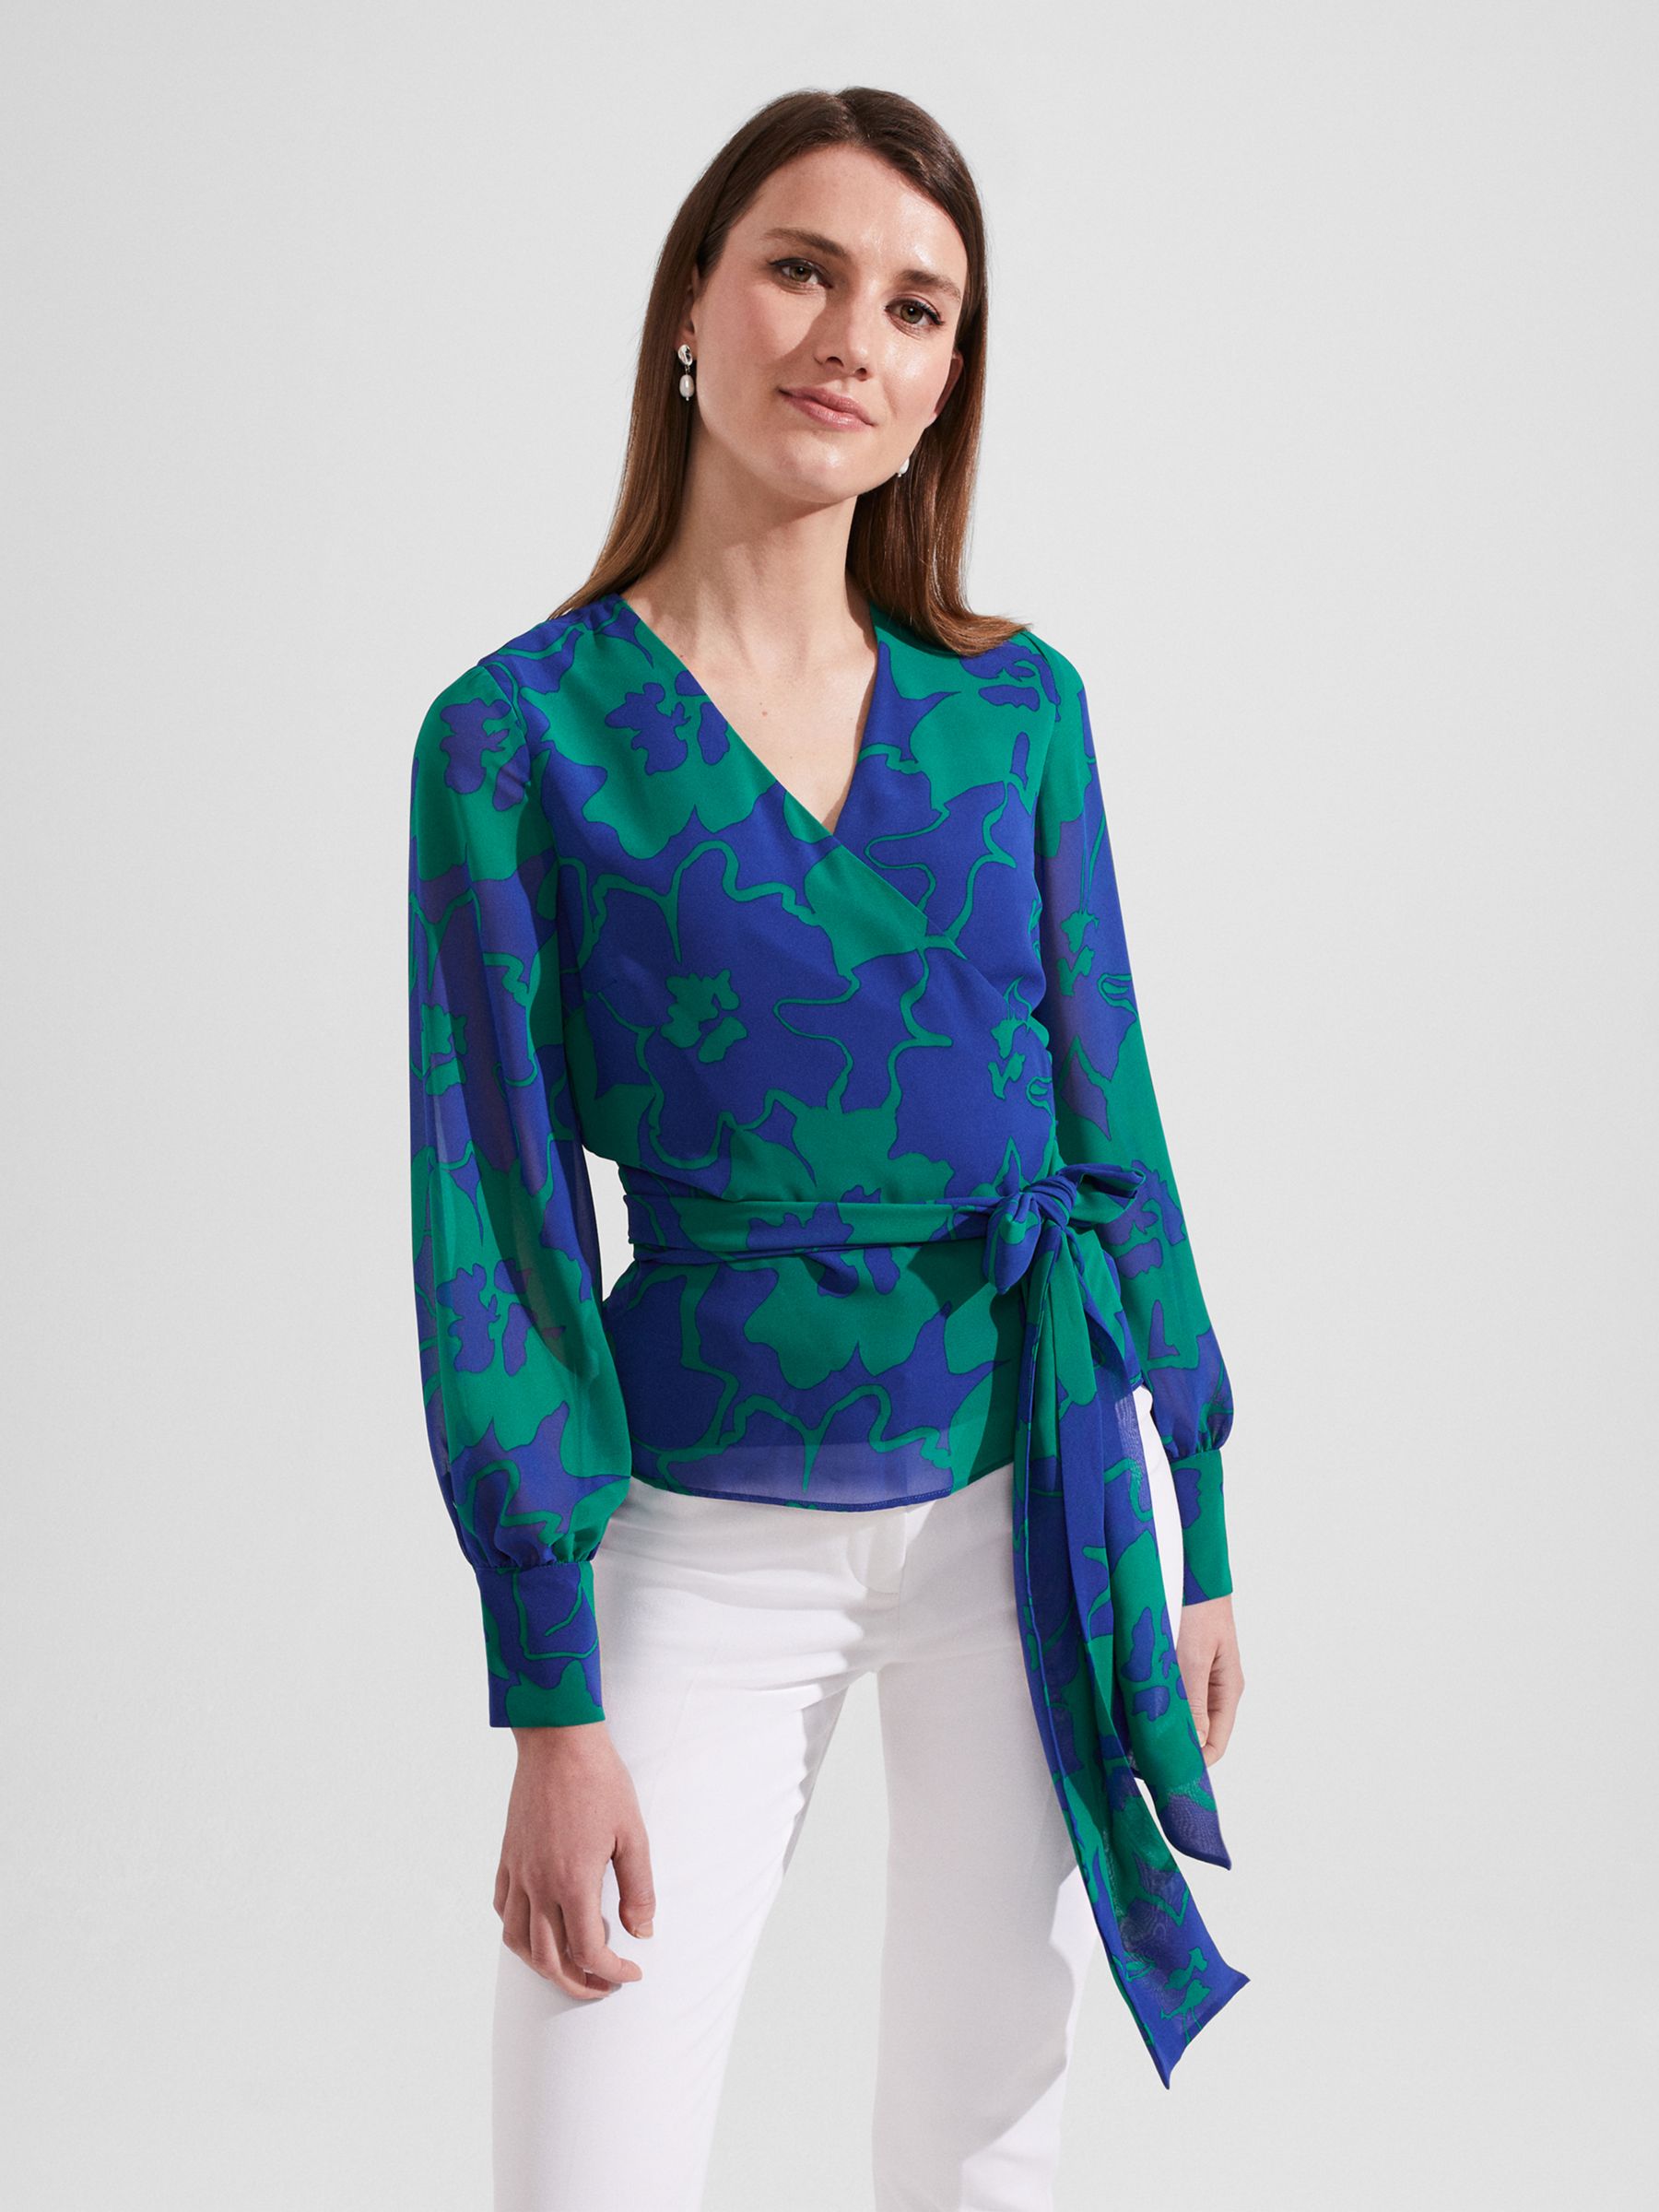 Pretty wrap blouse!  Knot blouse design, Chiffon sleeveless top